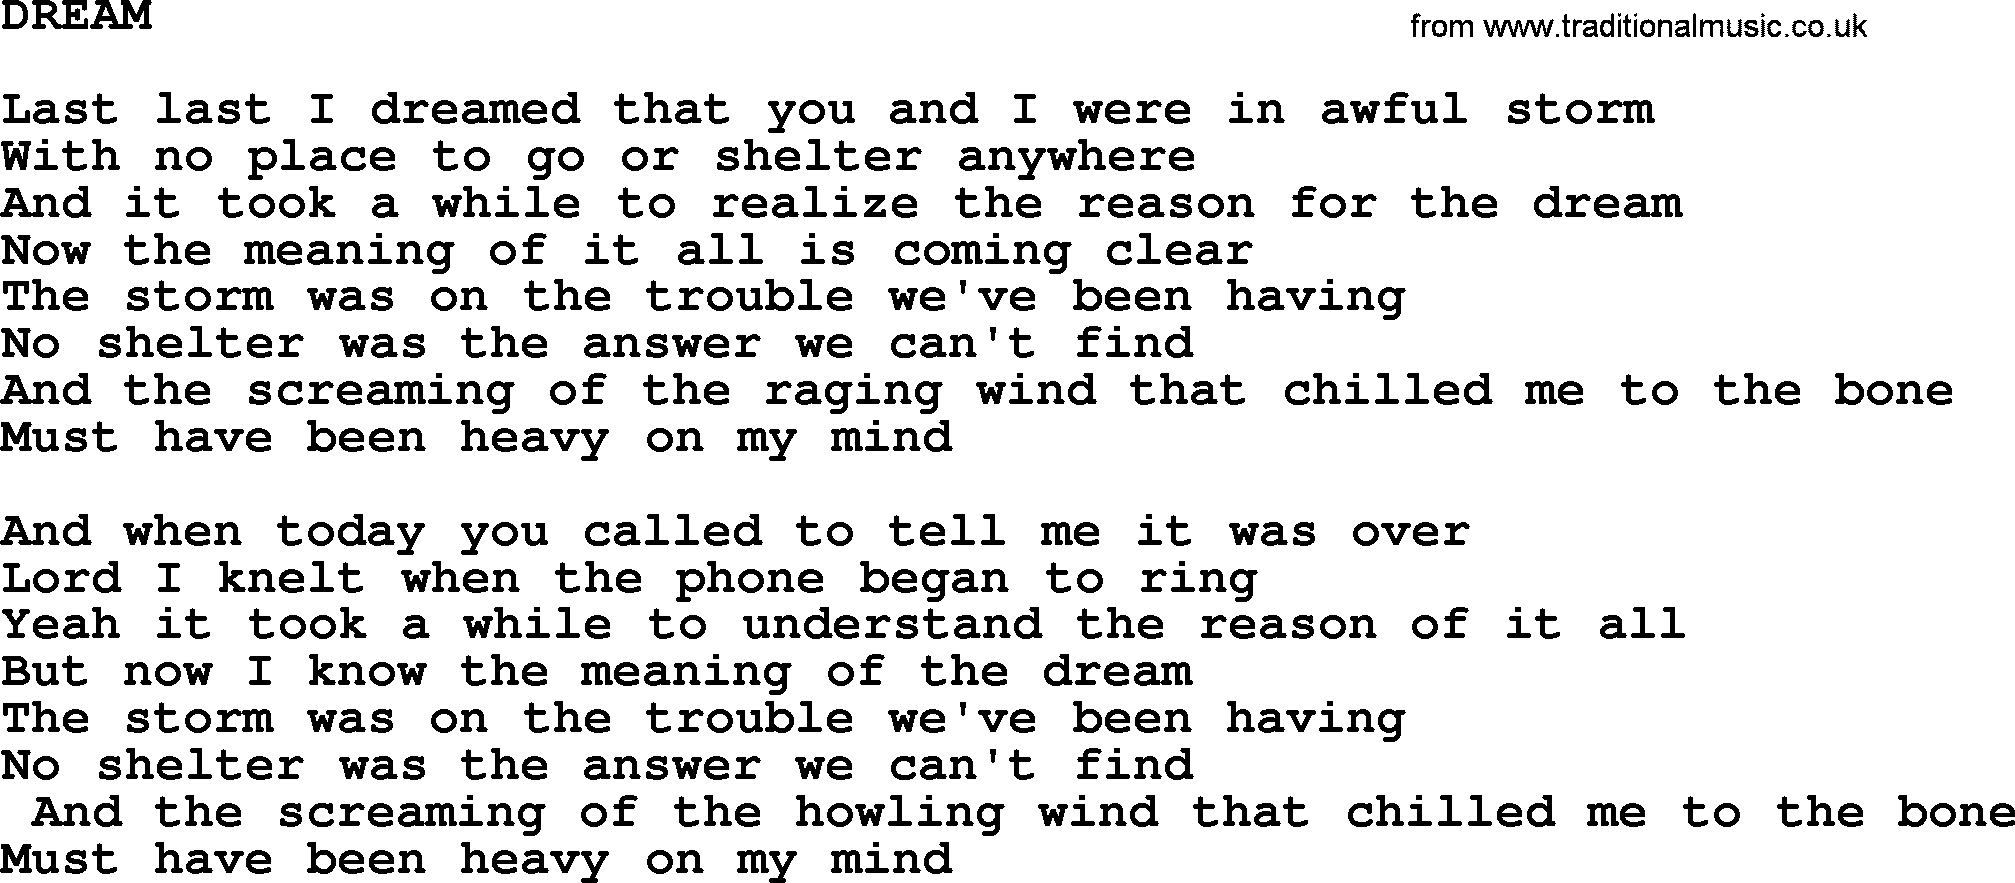 Merle Haggard song: Dream, lyrics.